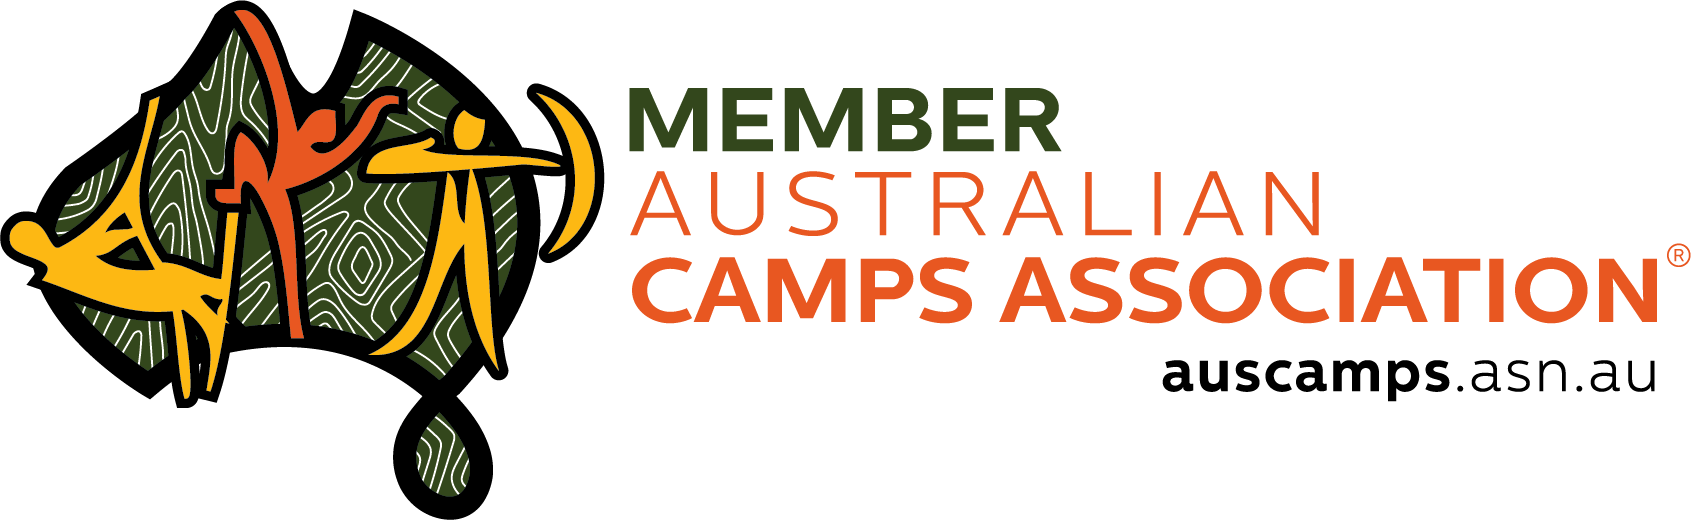 Australian Camps Association logo